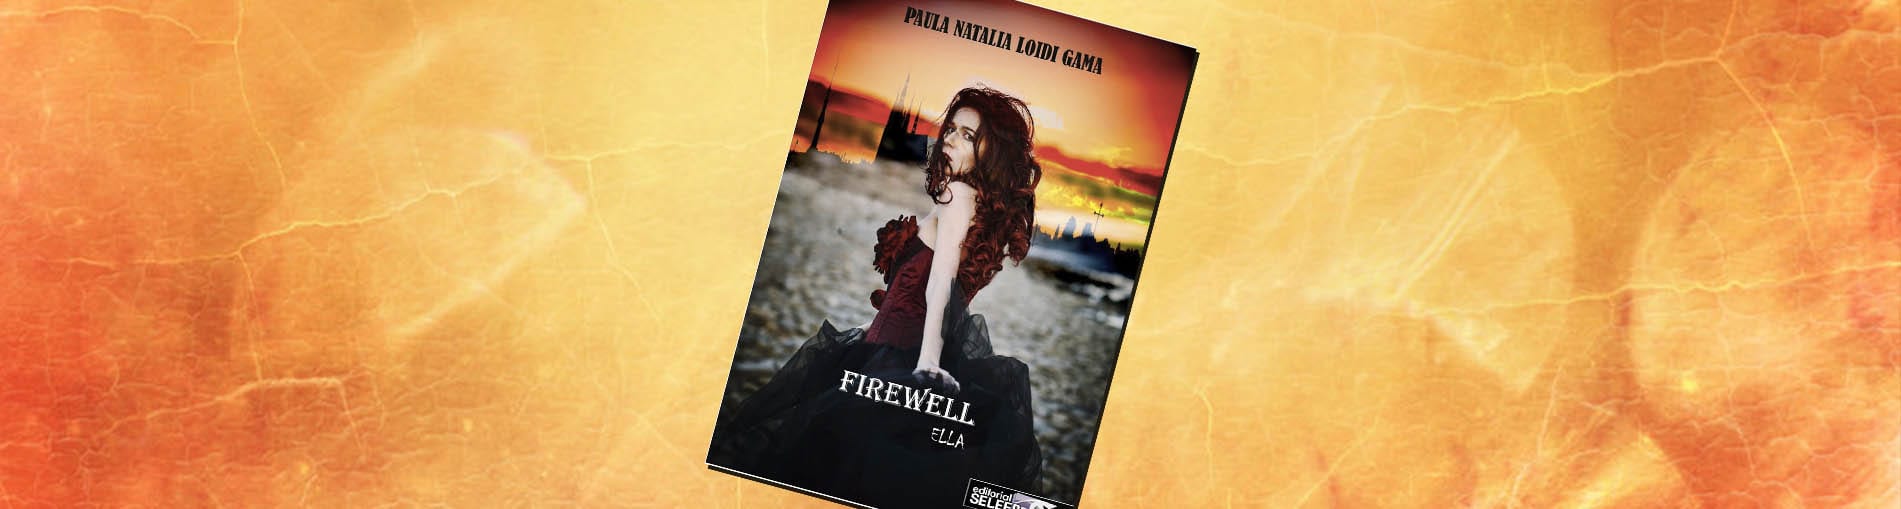 Natalia Loidi nos cuenta cómo nació ‘Firewell’